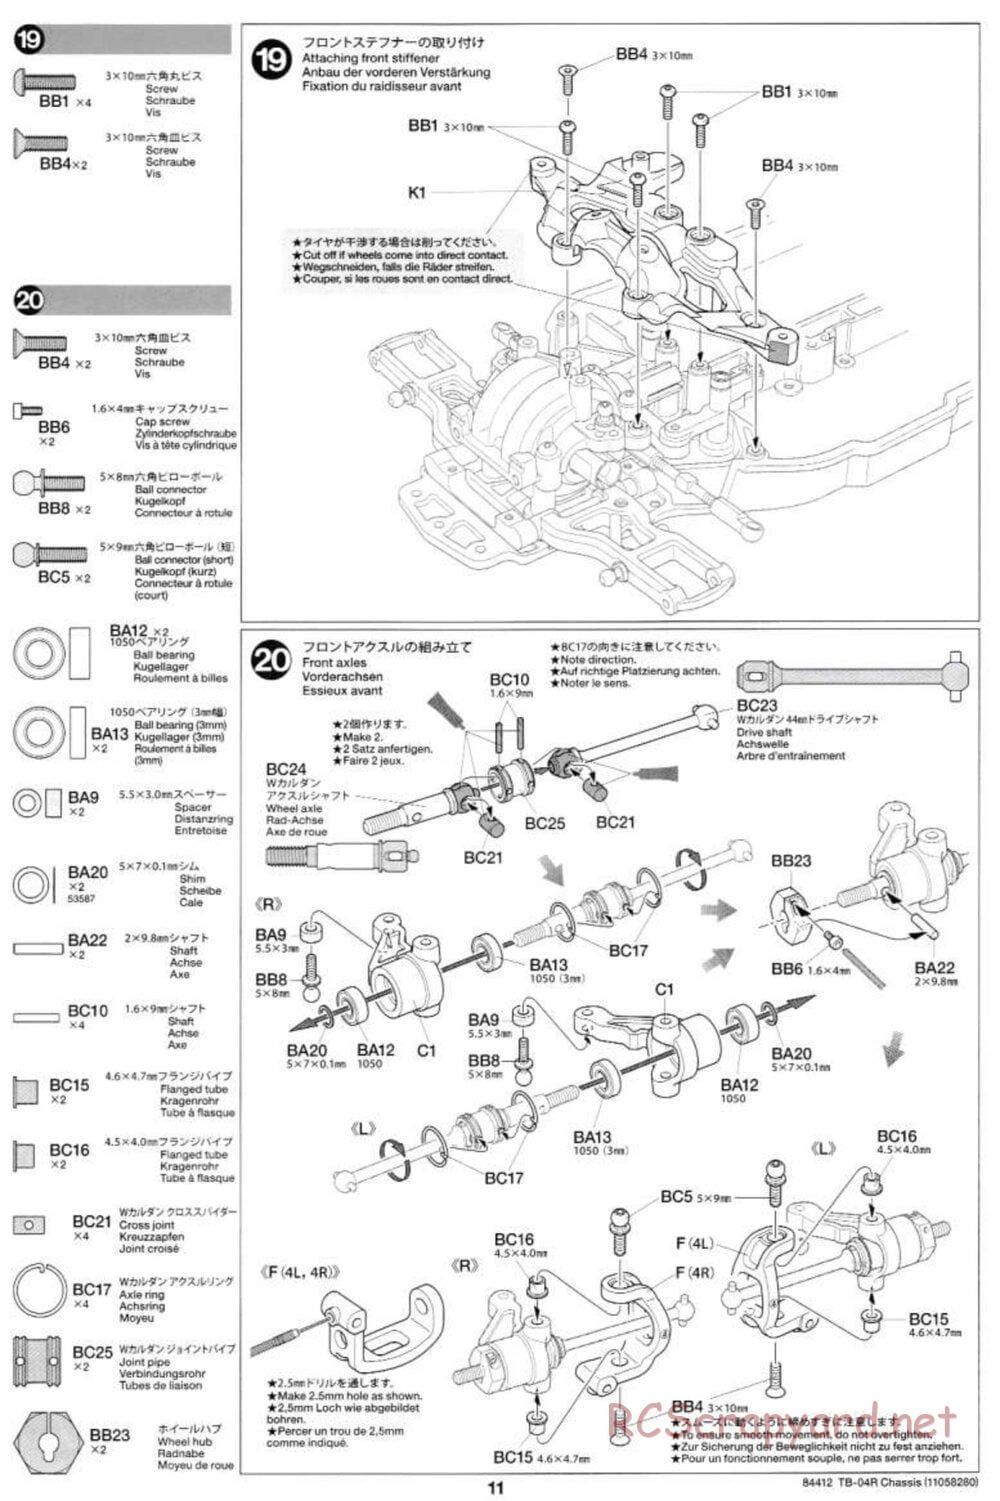 Tamiya - TB-04R Chassis Chassis - Manual - Page 11